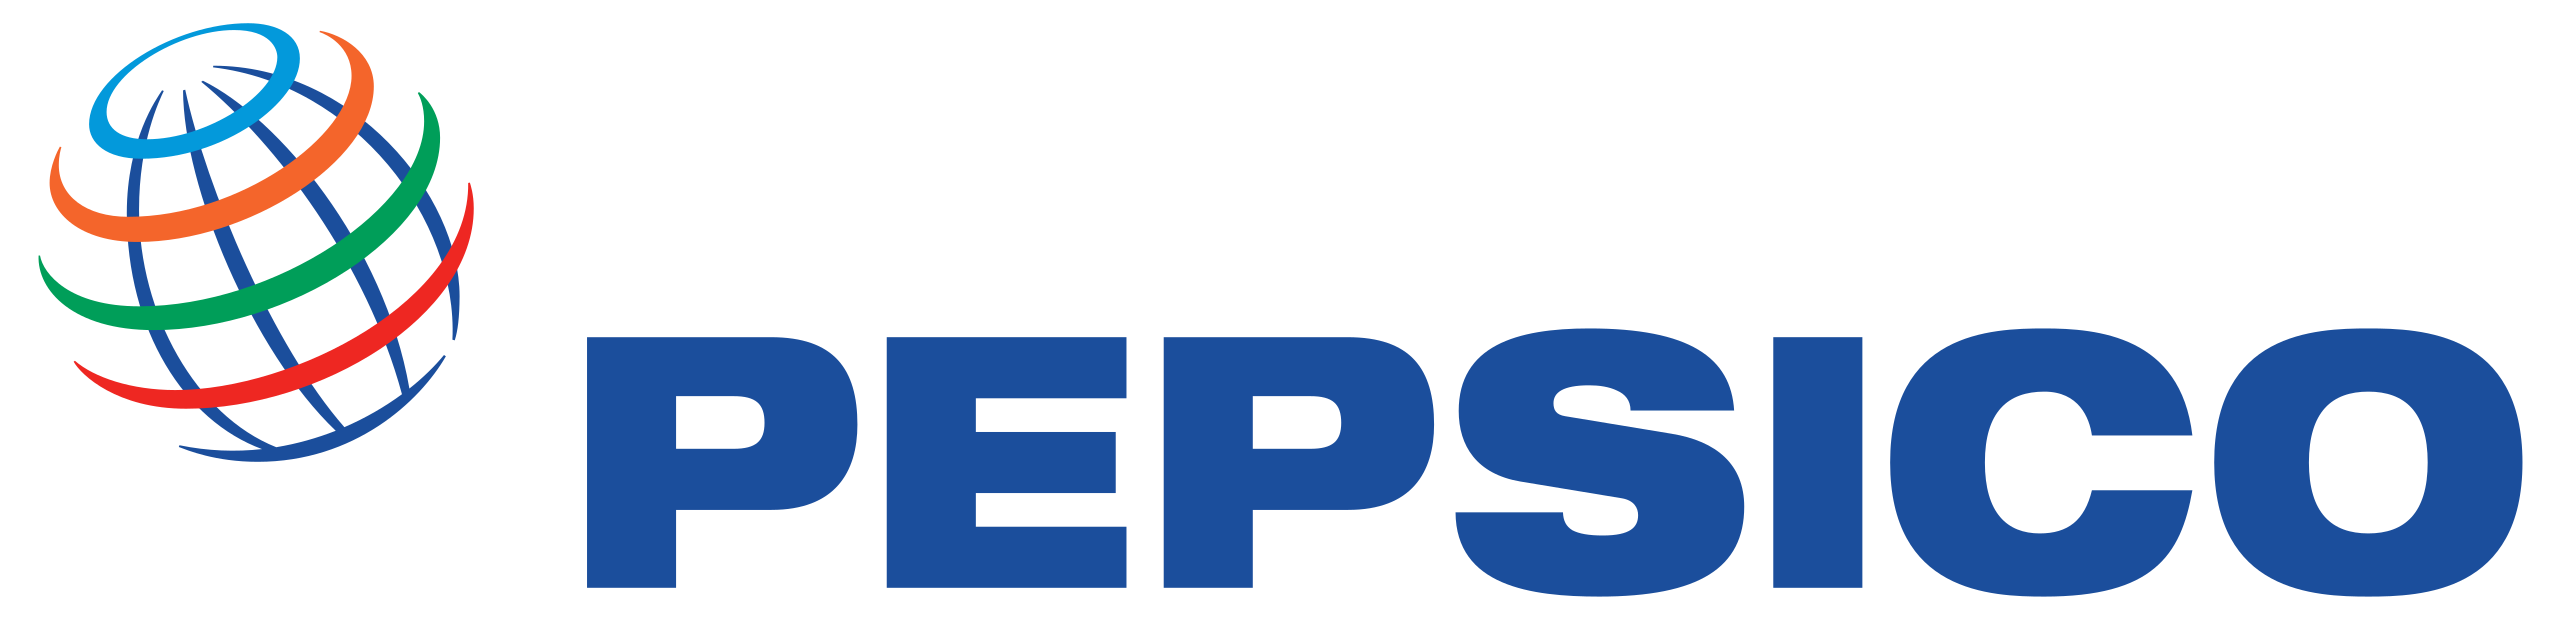 2560px-Pepsico-logo.svg